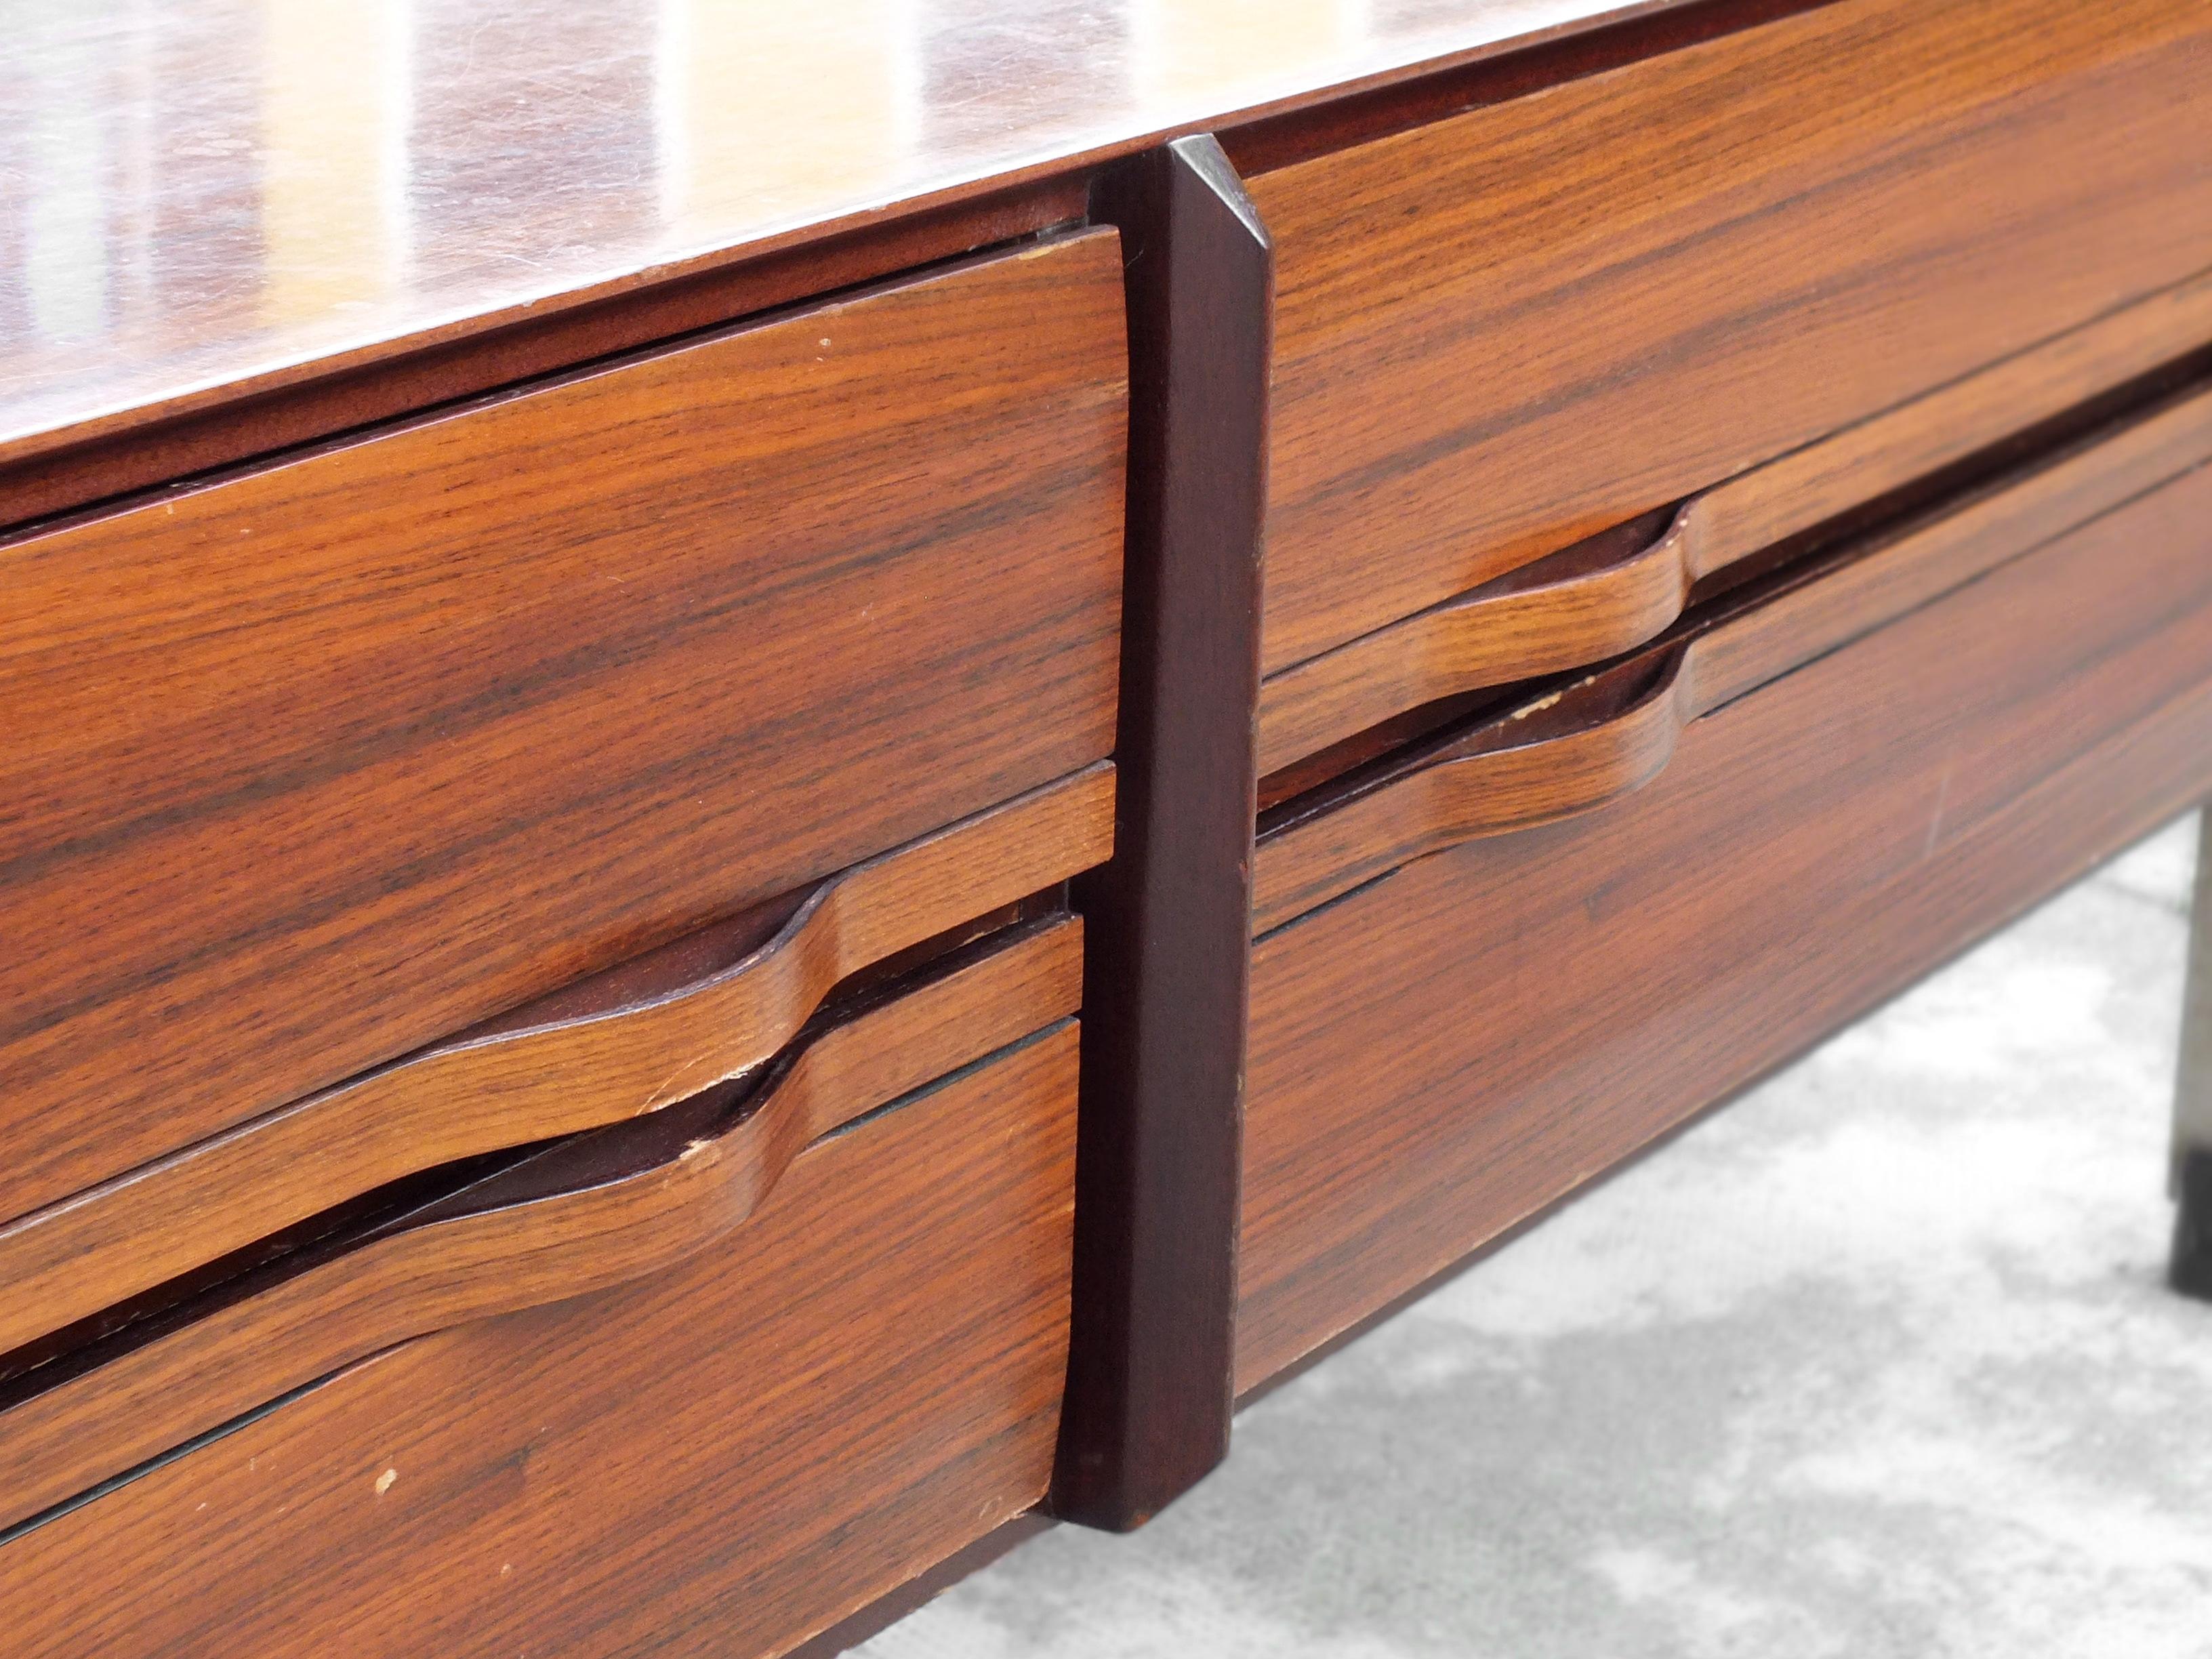 La Permanente meuble Cantu' Italy minimalist sideboard probable Frattini design  For Sale 7